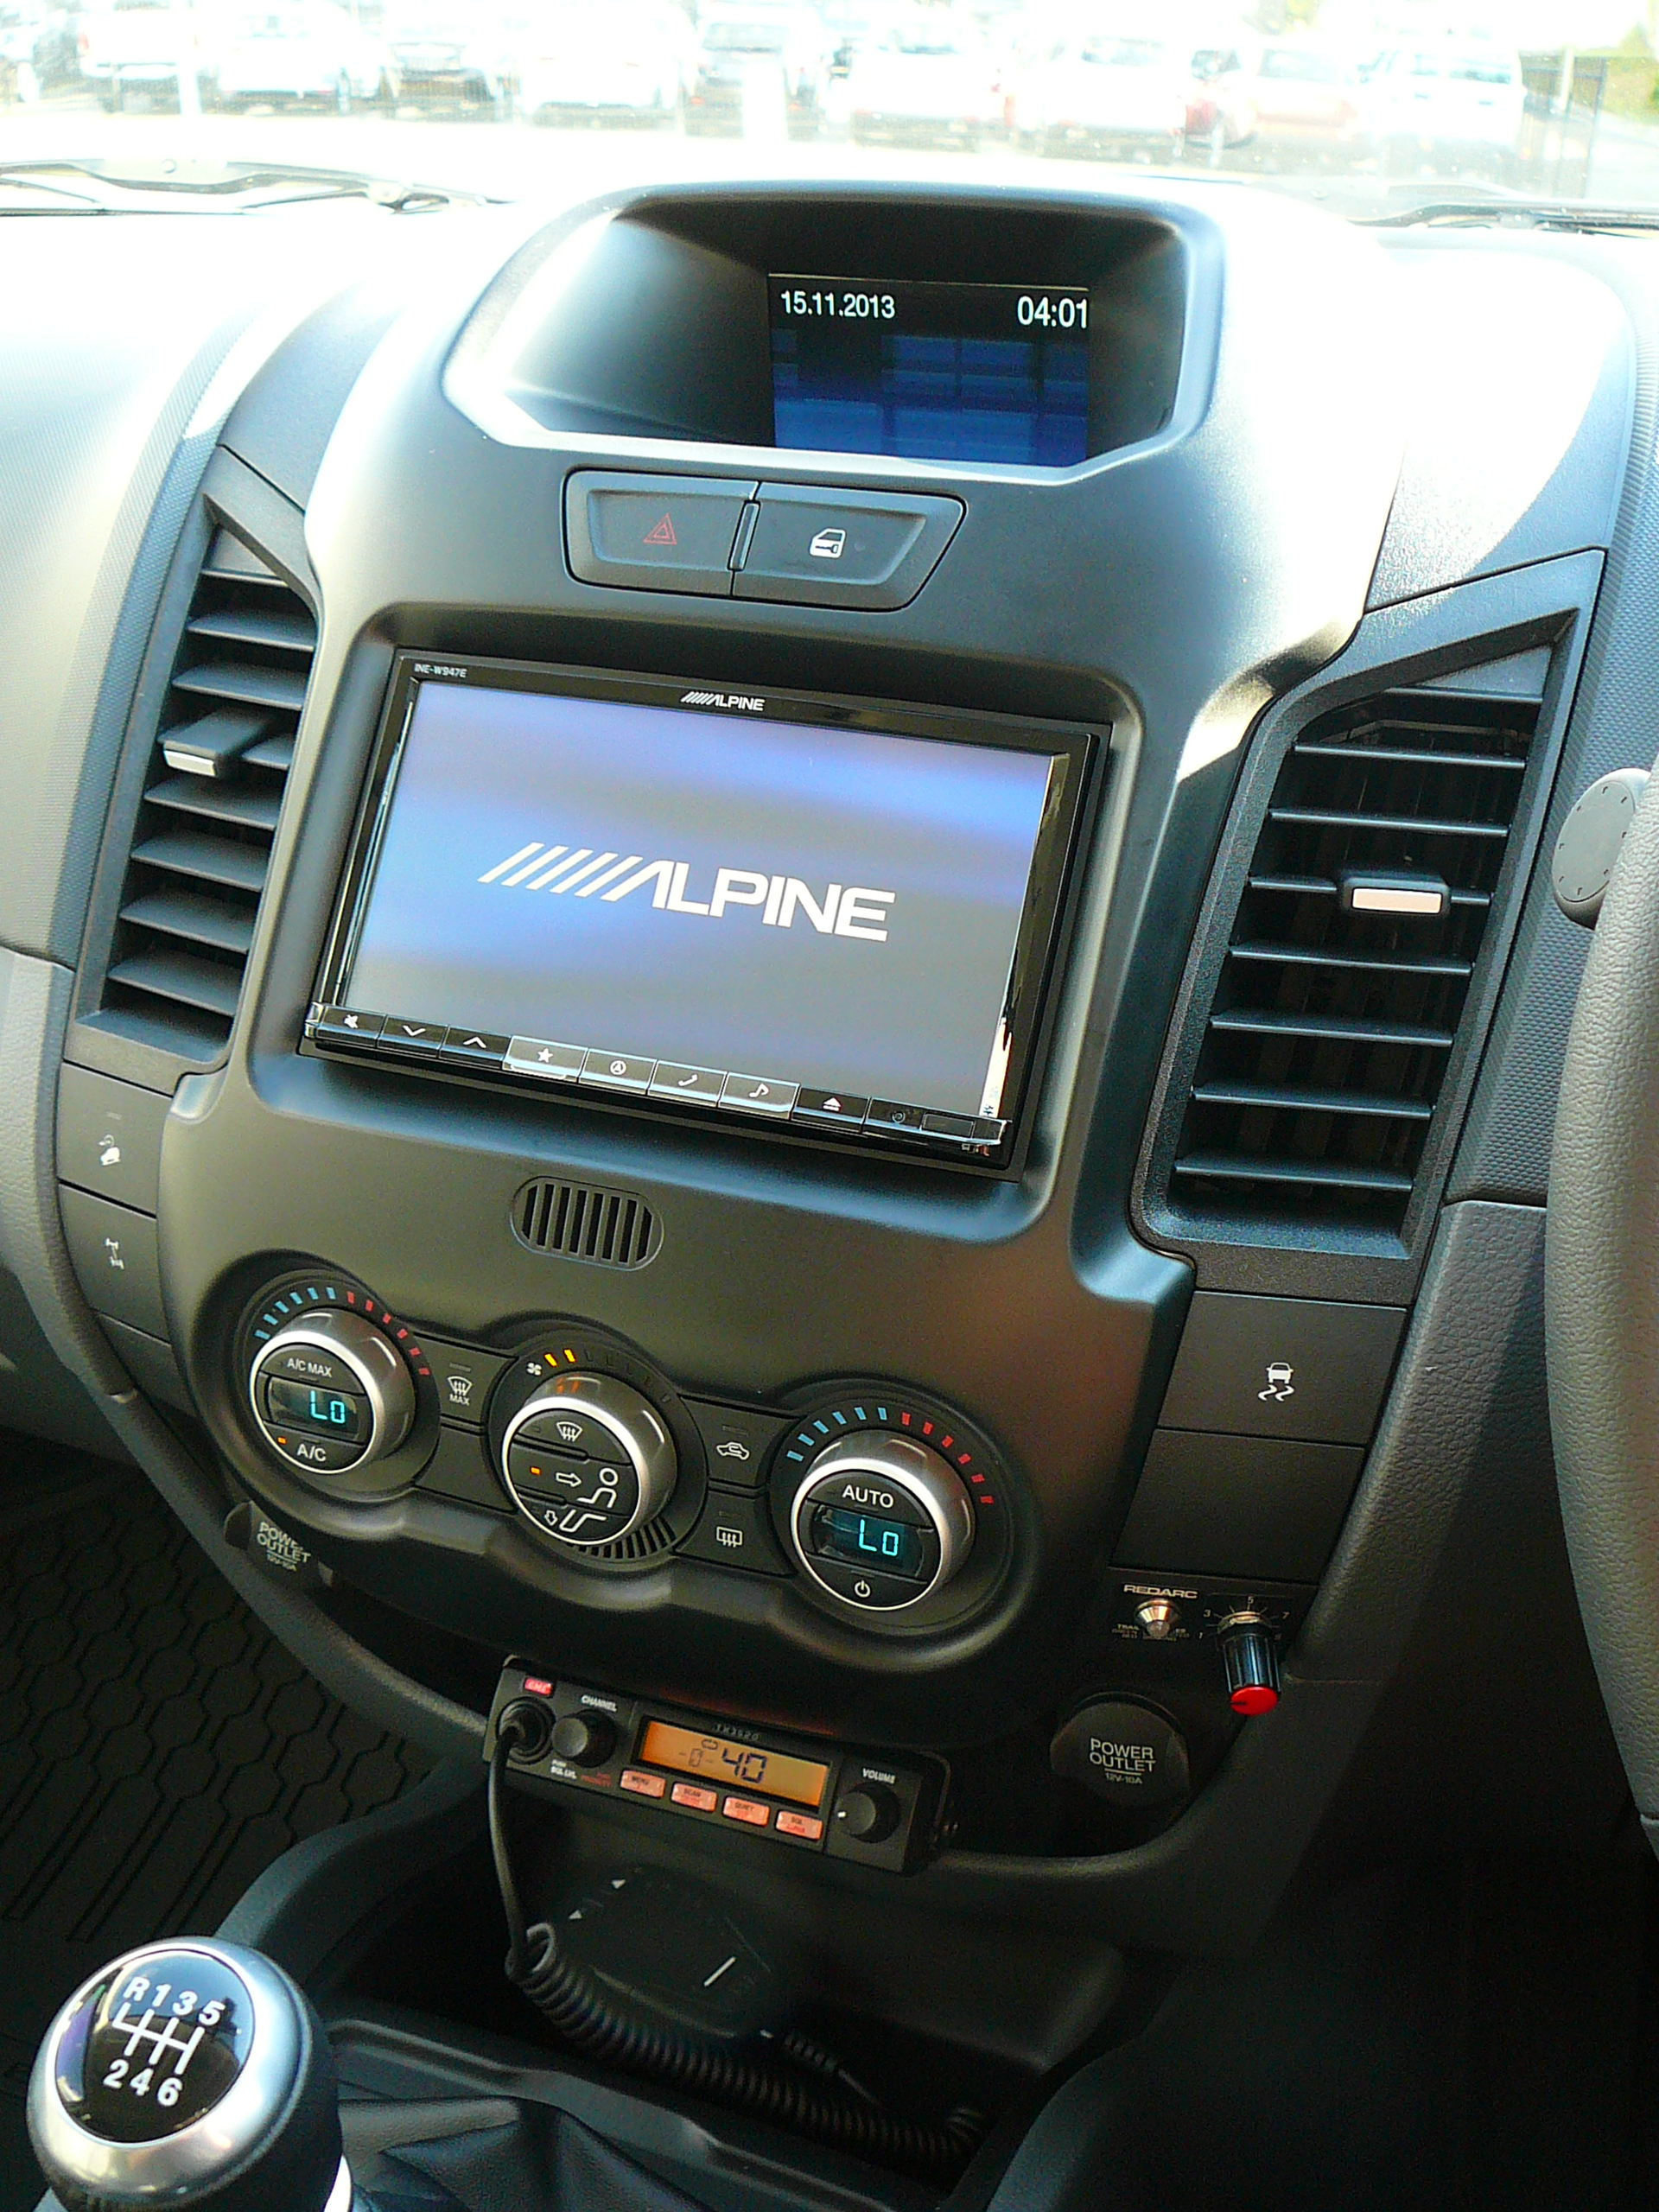 Ford Ranger 2013, Alpine GPS Navigation – GME UHF CB Radio – Redarc EBRH Brake Controller